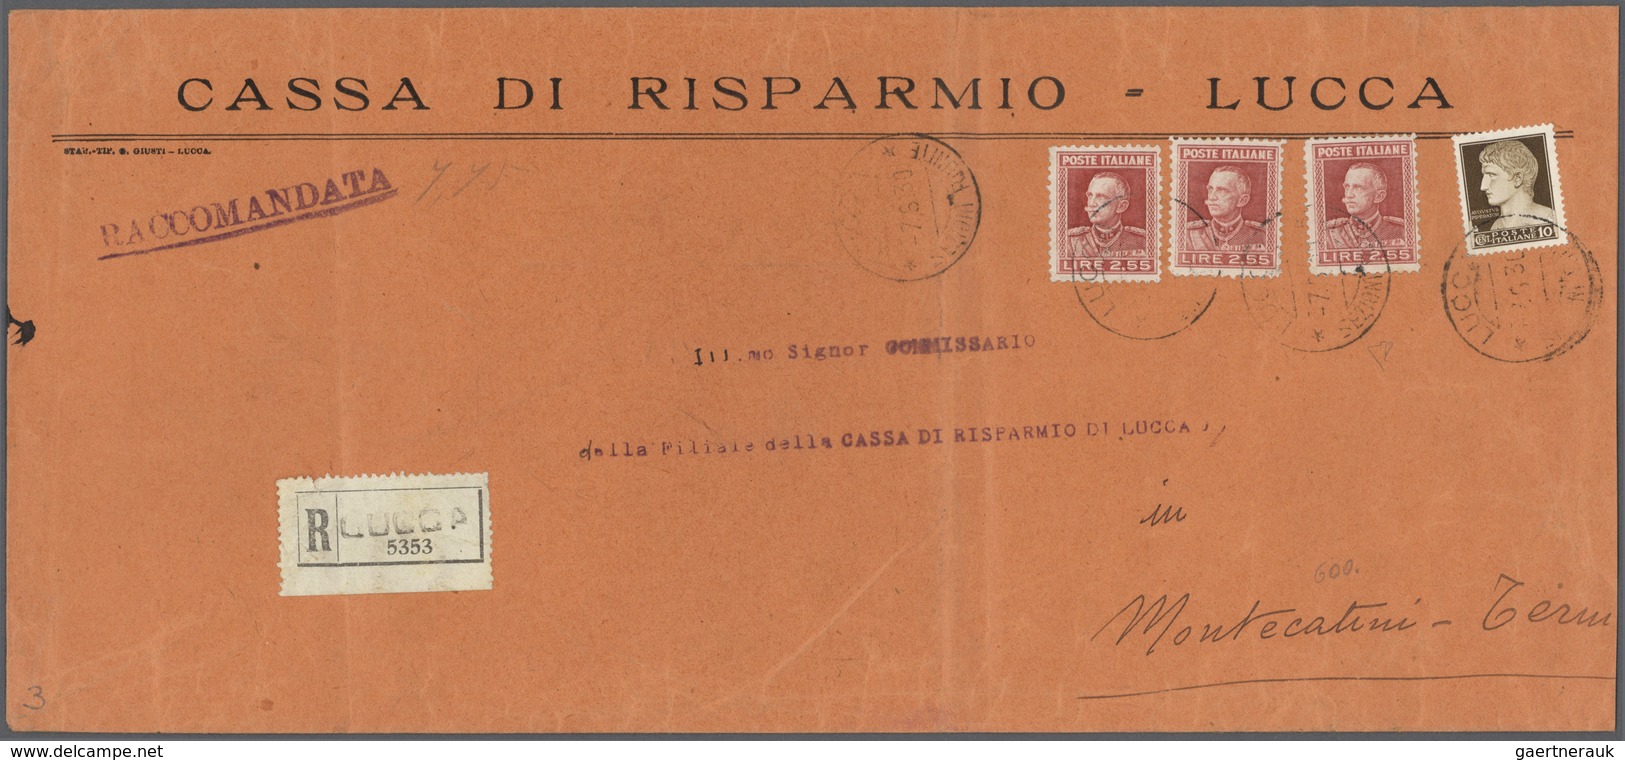 00963 Italien: 1926/1931, Bank correspondance "CASSA DI RISPARMIO DI LUCCA", group of five highly franked